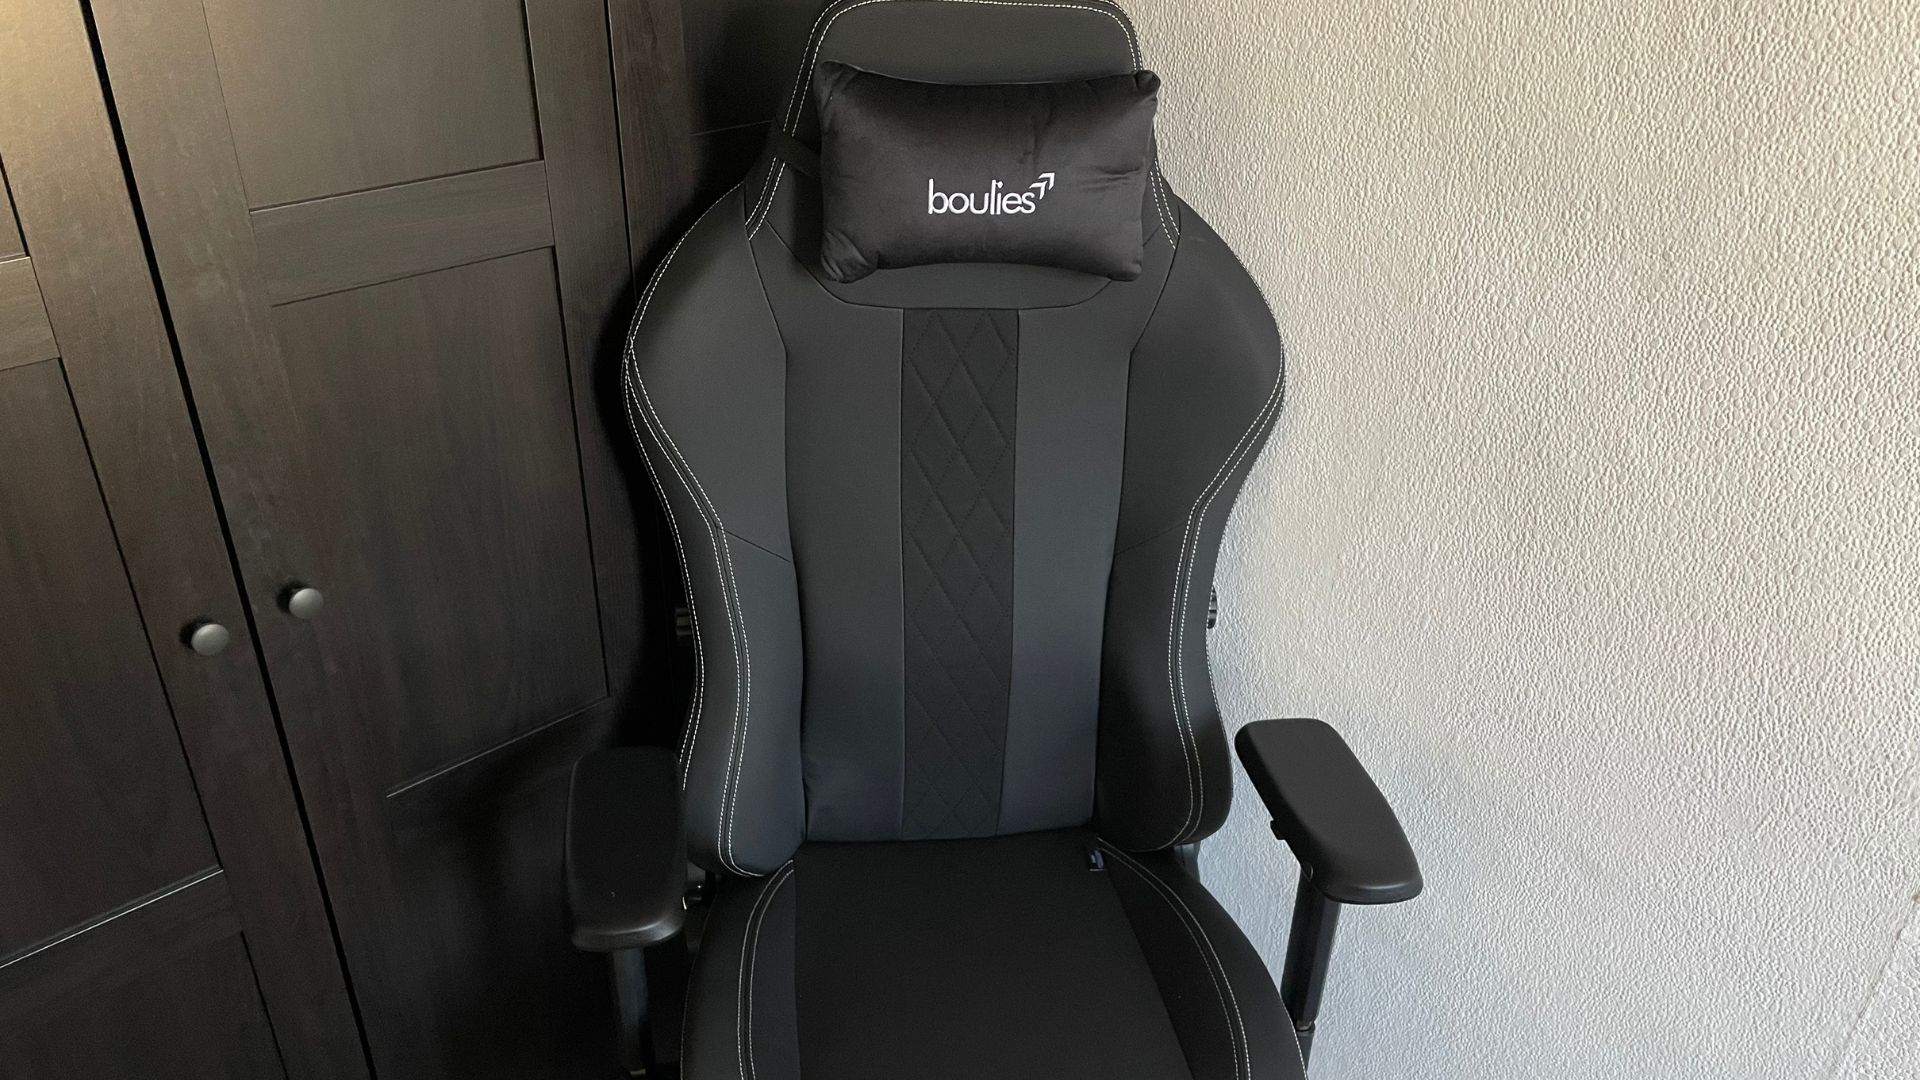 Boulies Master Series gaming chair